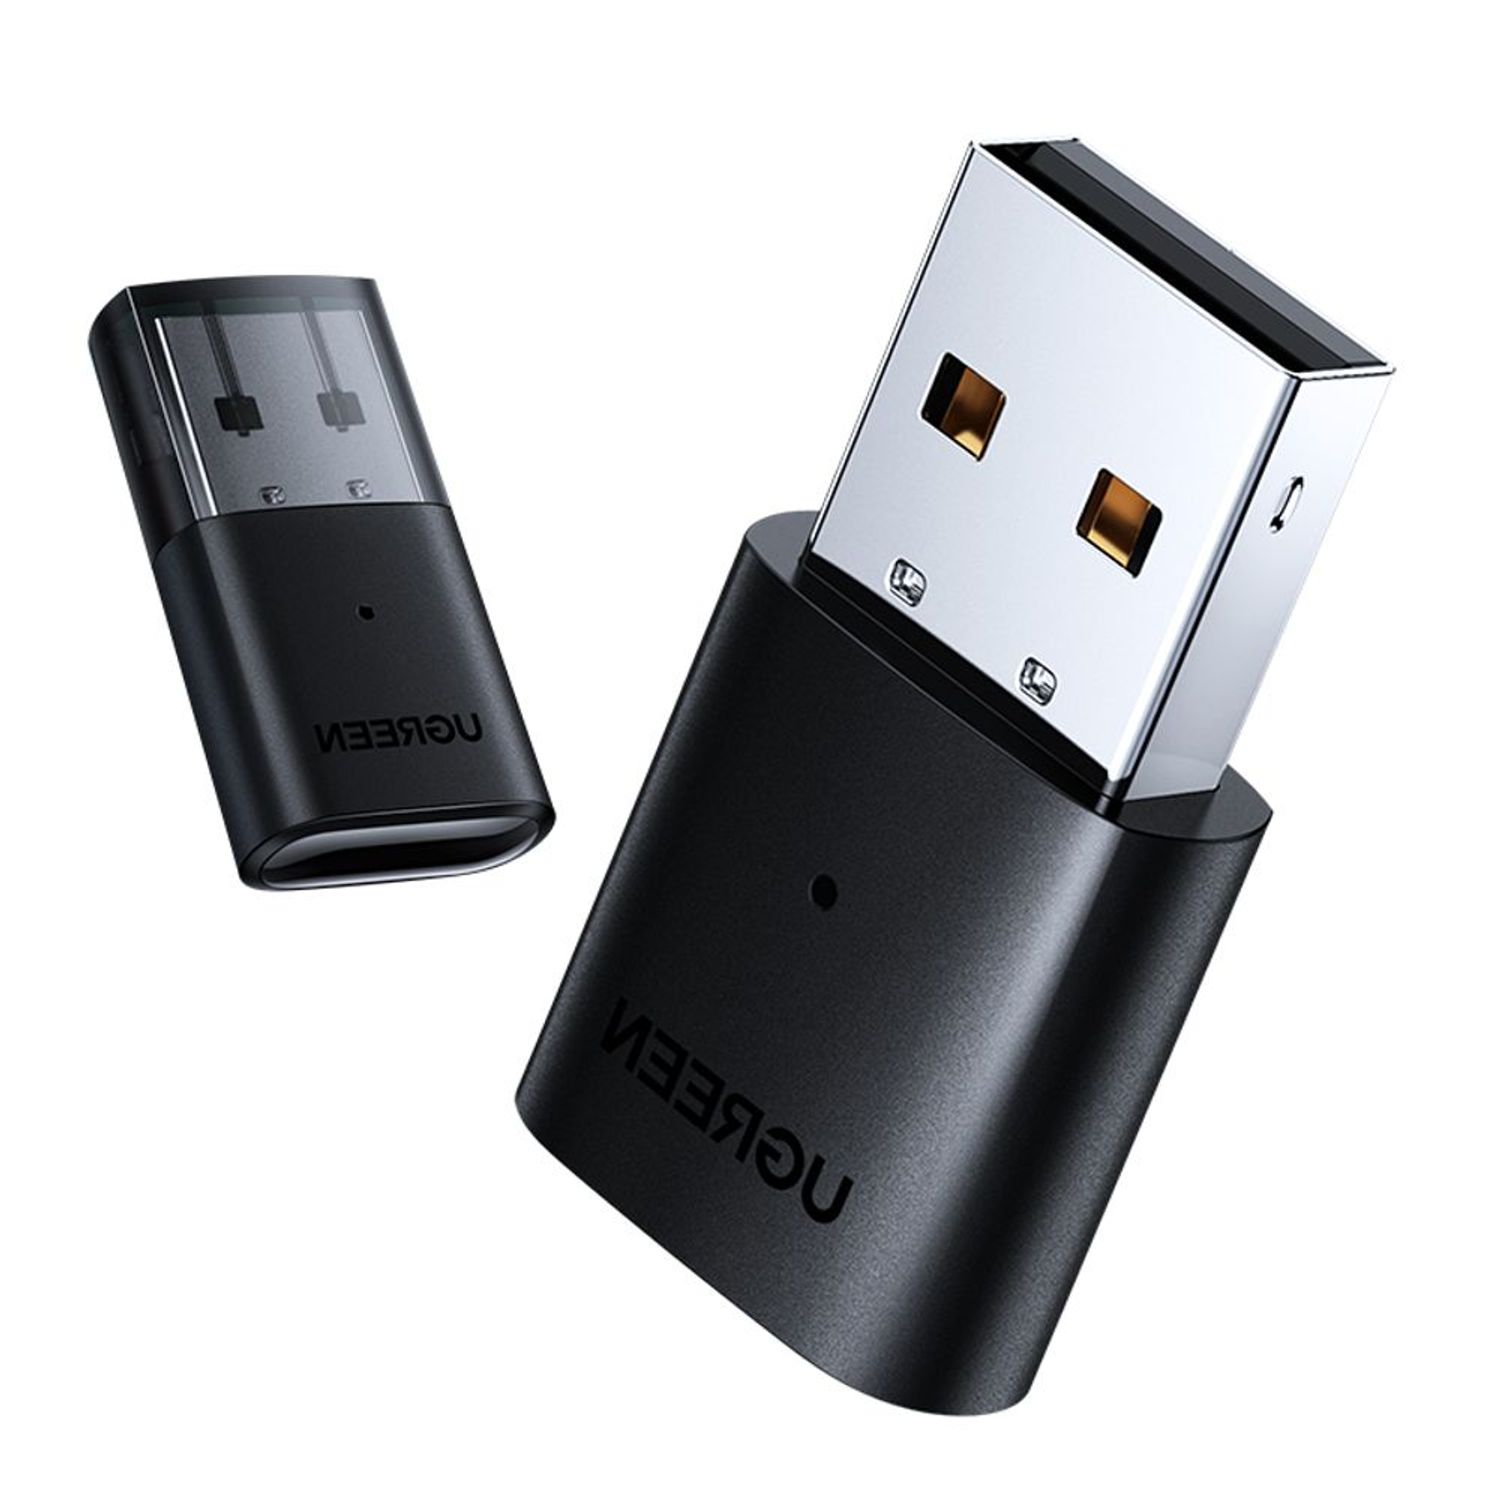 Adaptador USB Bluetooth 5 0 para PC 5,0, llave de módulo Bluetooth 5,1 para